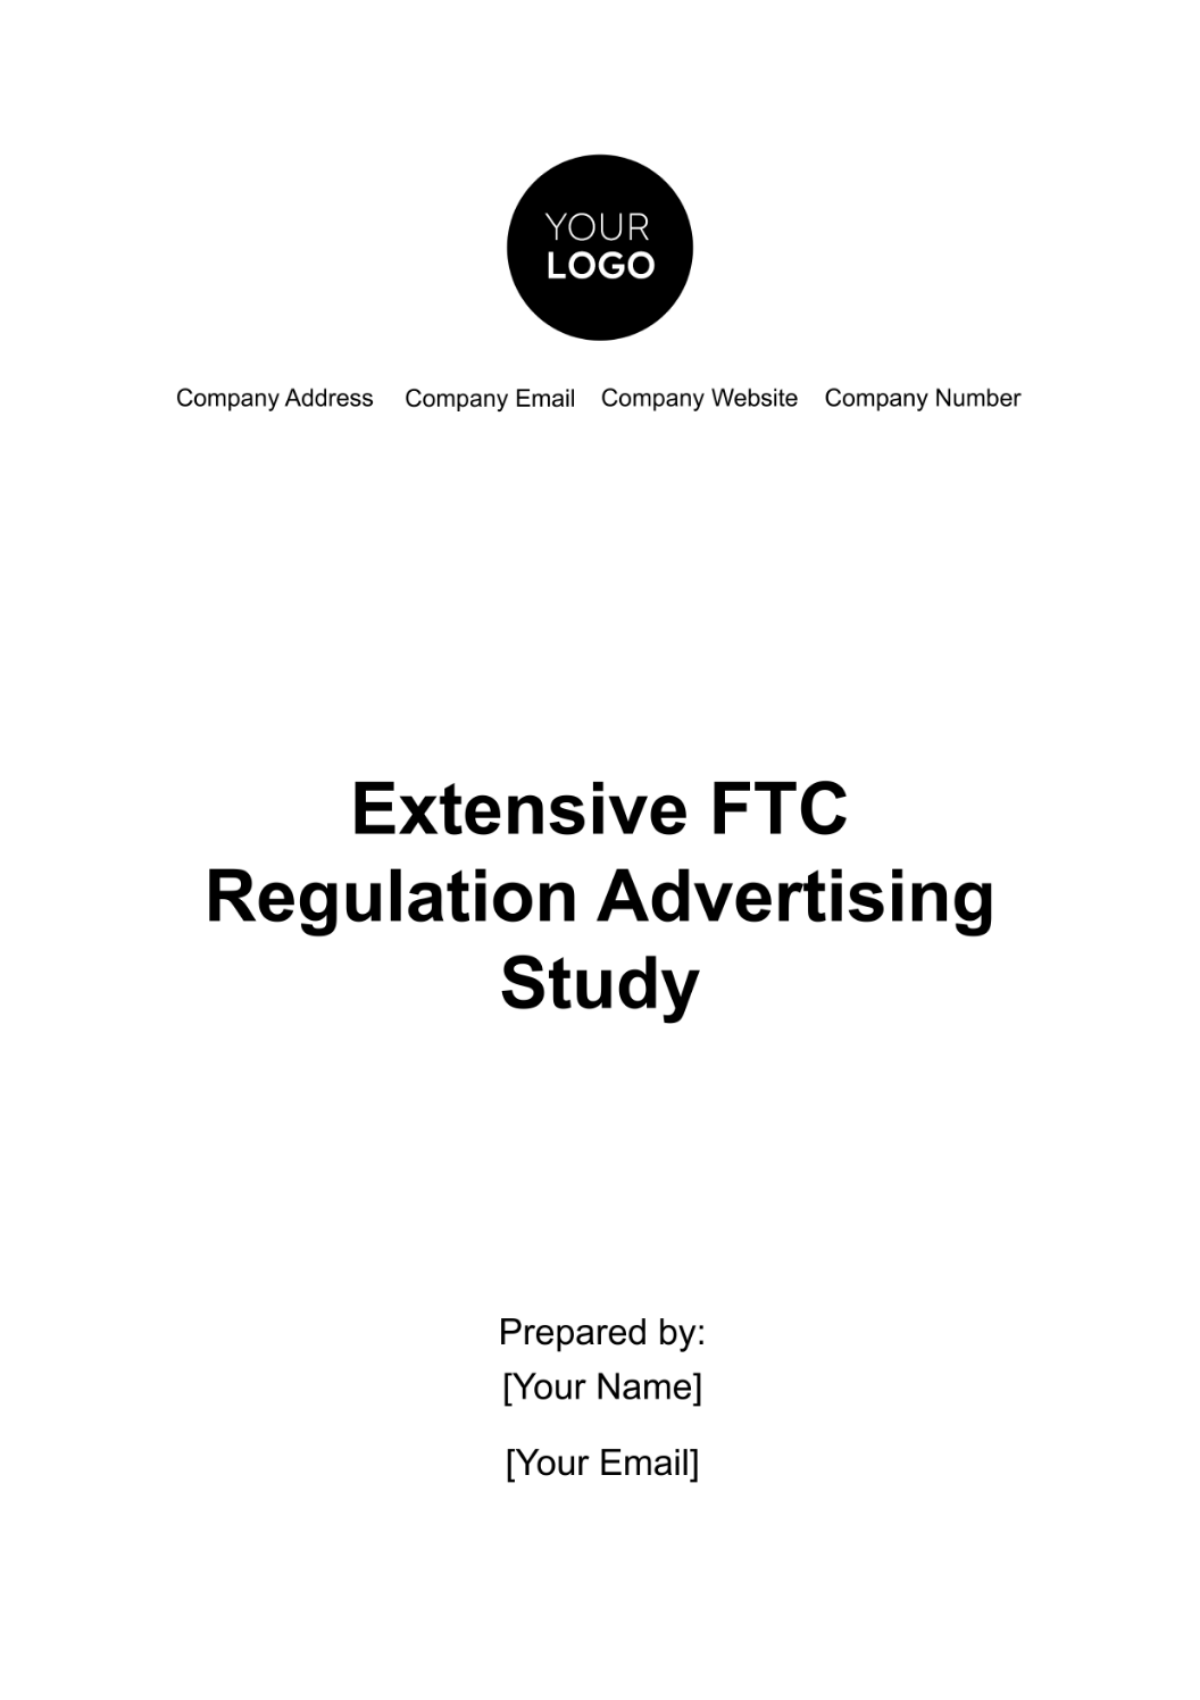 Free Extensive FTC Regulation Advertising Study Template